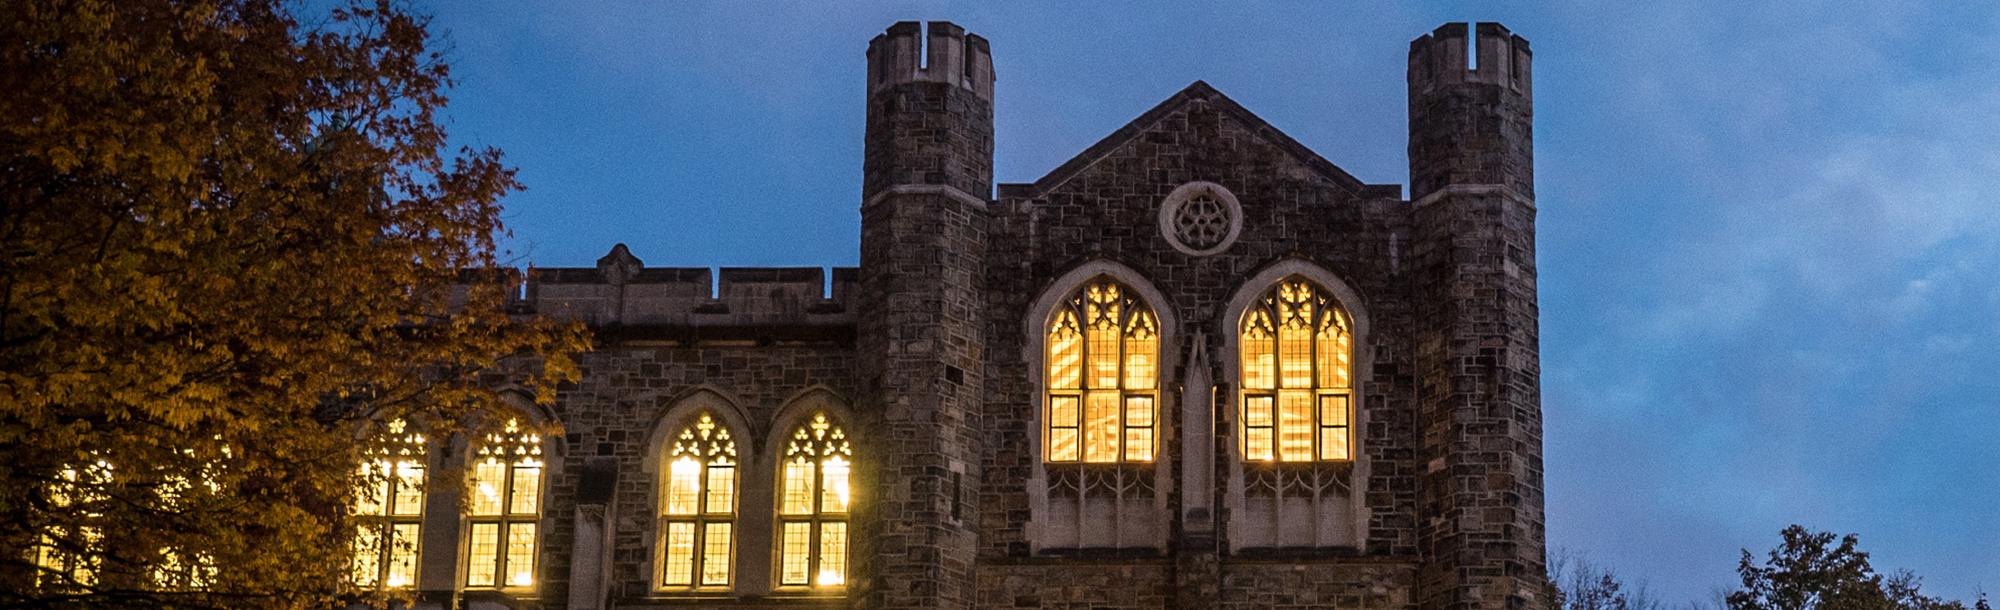 Lehigh University building windows at nights